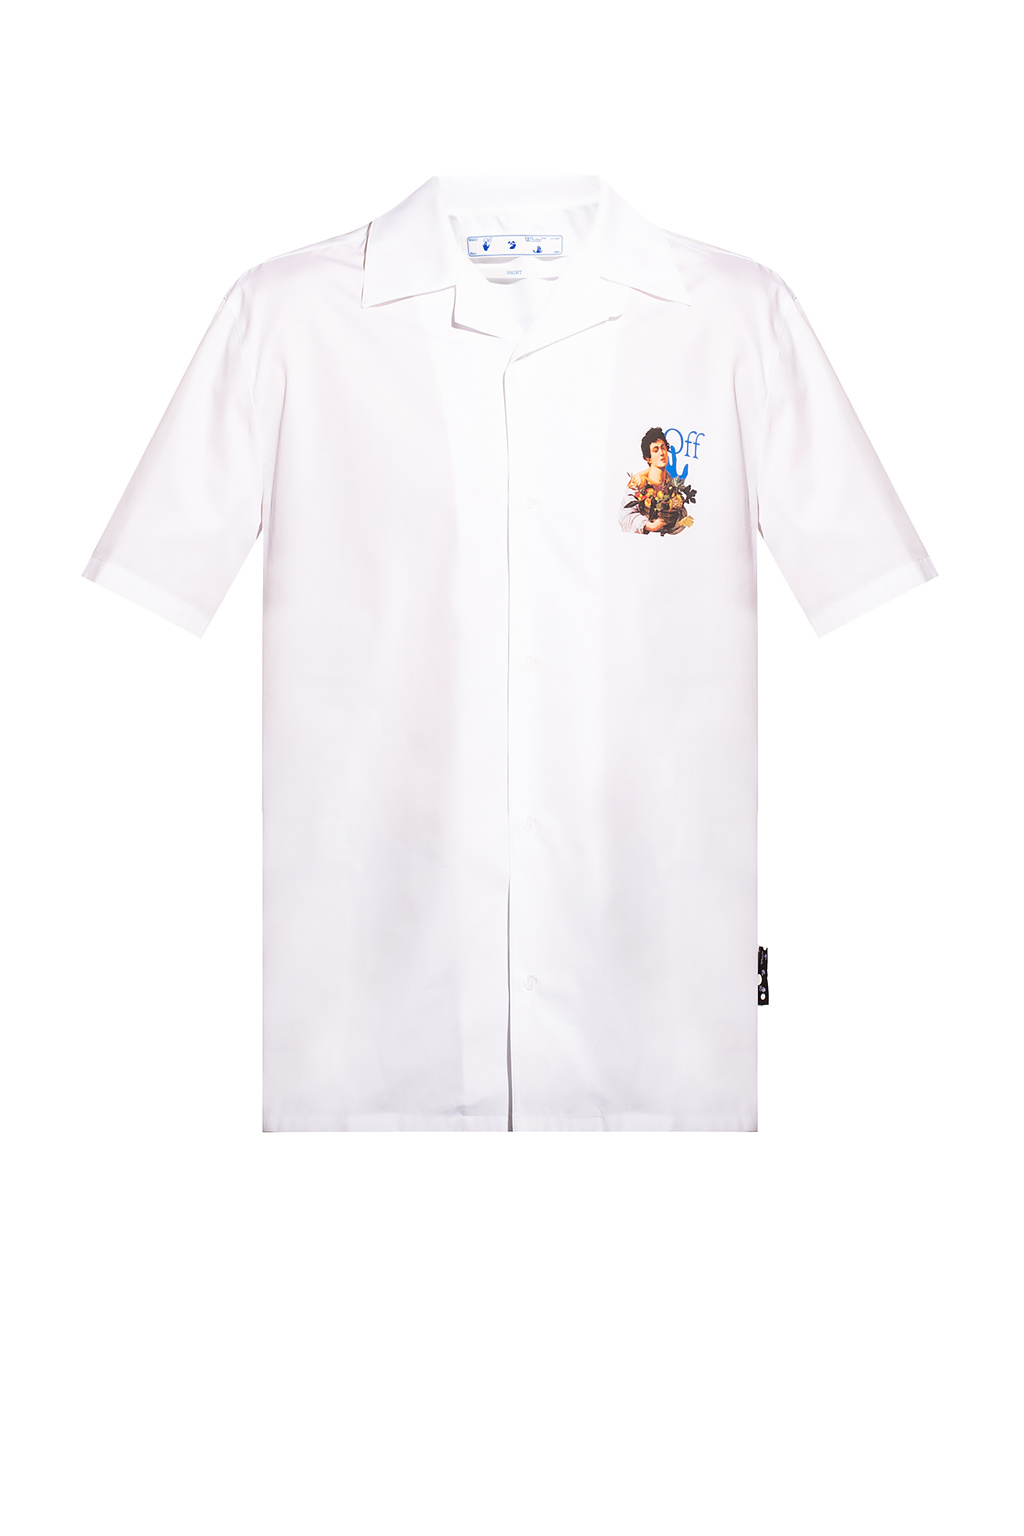 Off-White Short-sleeved Kappa shirt